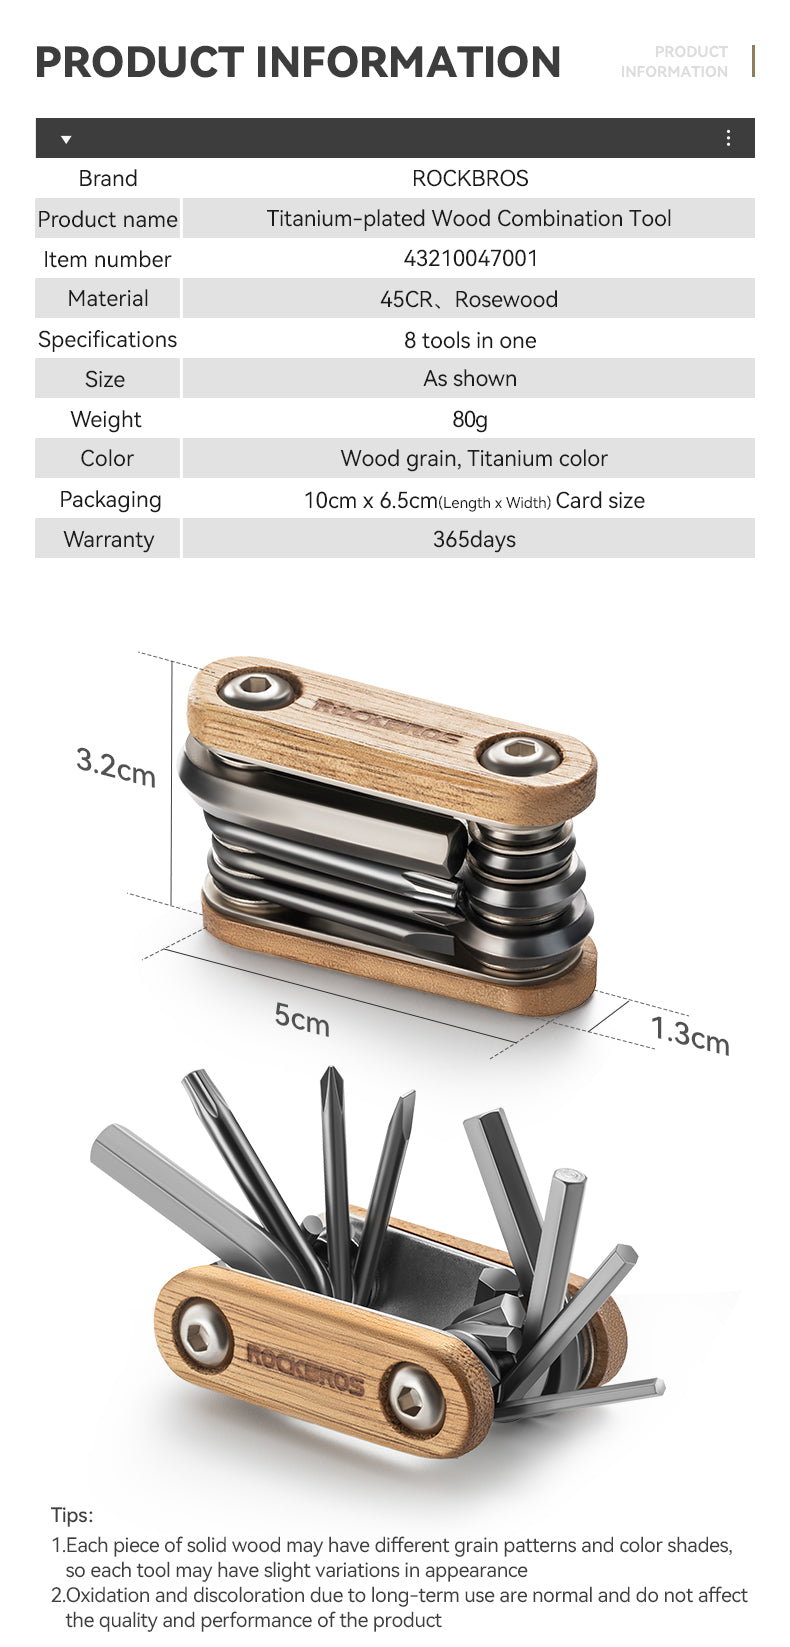 ROCKBROS 8-in-1 Multifunctional Portable Wooden Tool